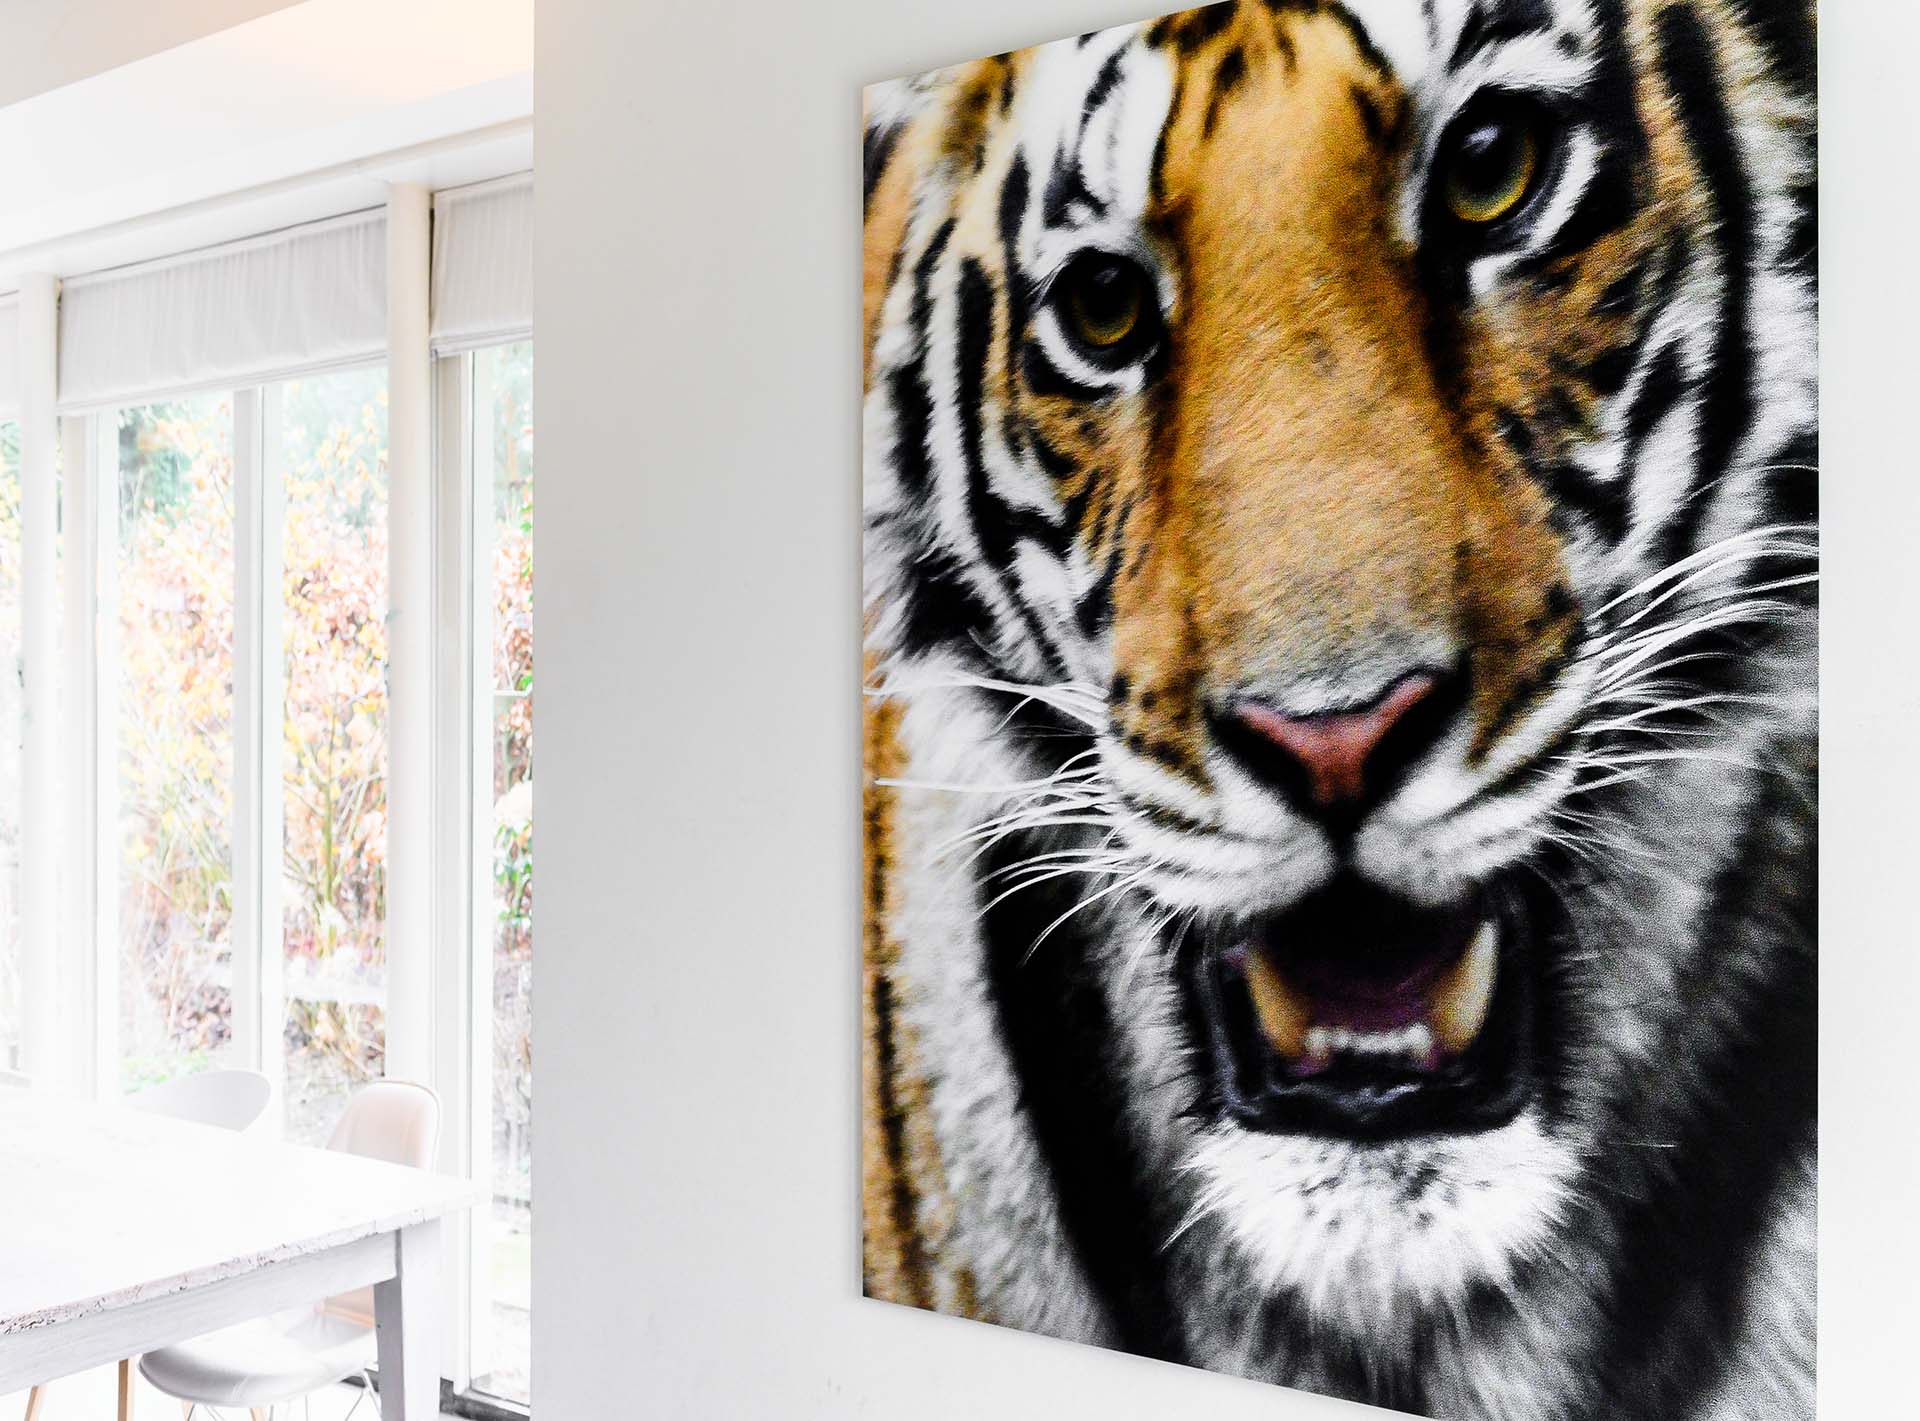 Tiger print on wall